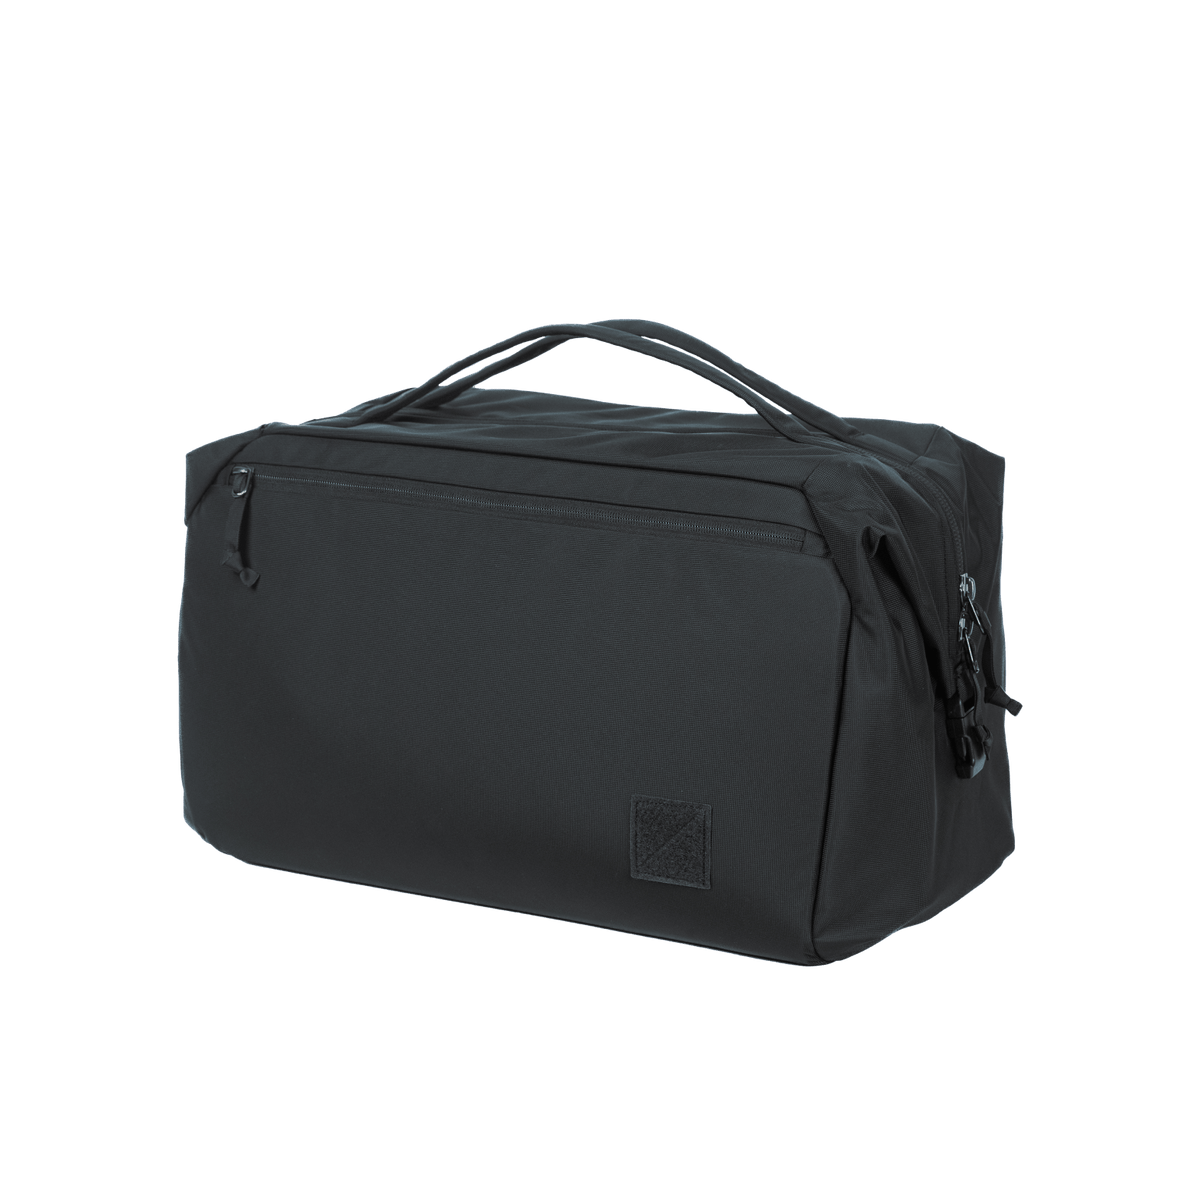 RC Mini Luggage Bag, Sturdy Wear Resistant RC Car Luggage Carrying